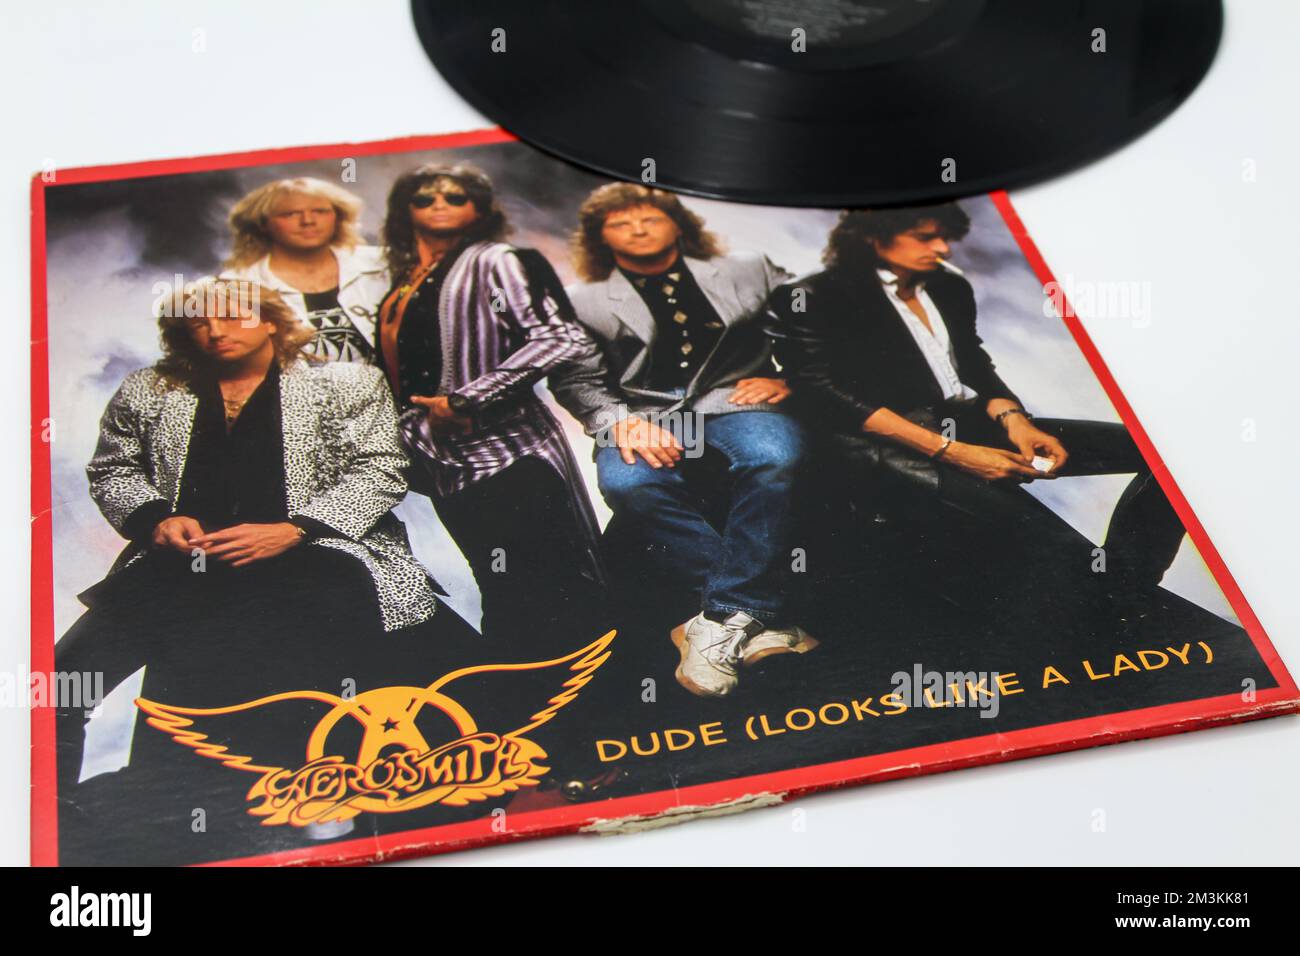 Focus on album title. Classic rock band, Aerosmith, music album on vinyl record LP disc. Titled Dude looks like a lady single Album Cover Stock Photo